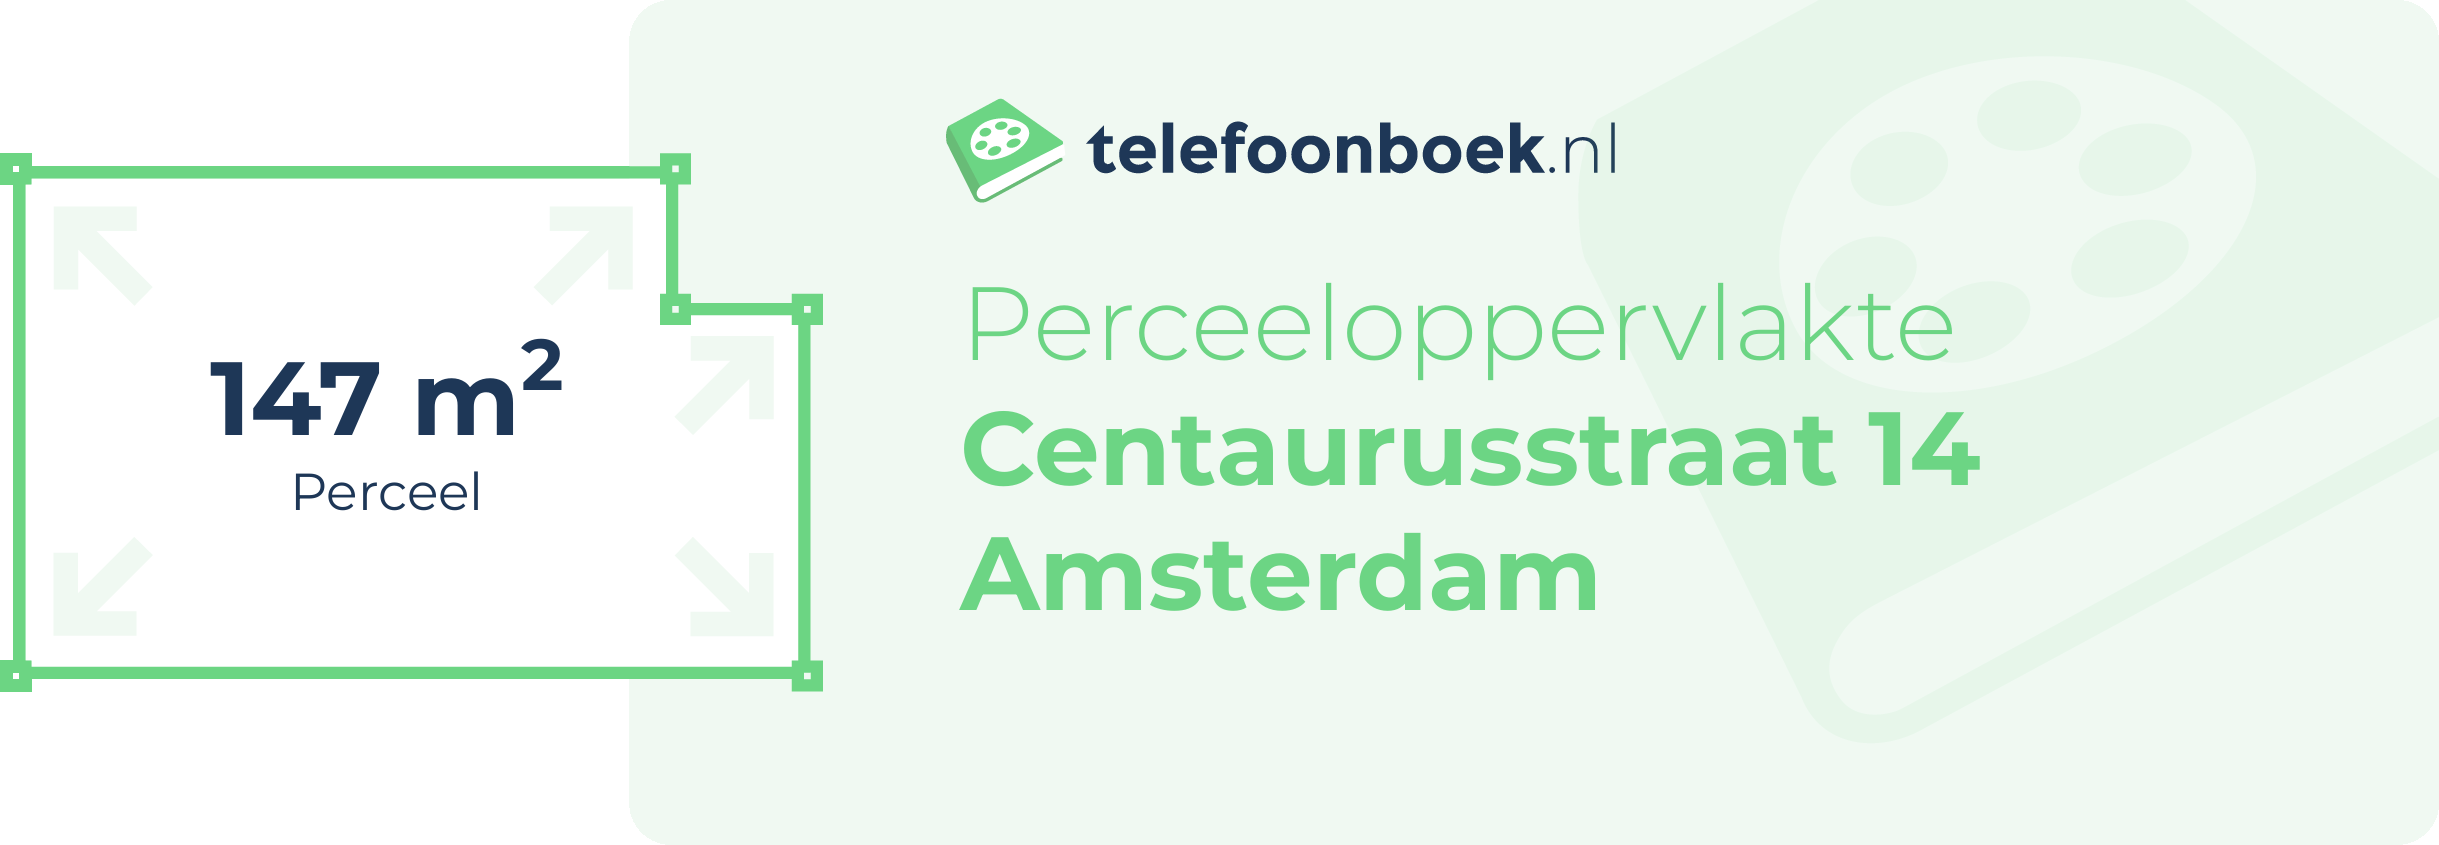 Perceeloppervlakte Centaurusstraat 14 Amsterdam